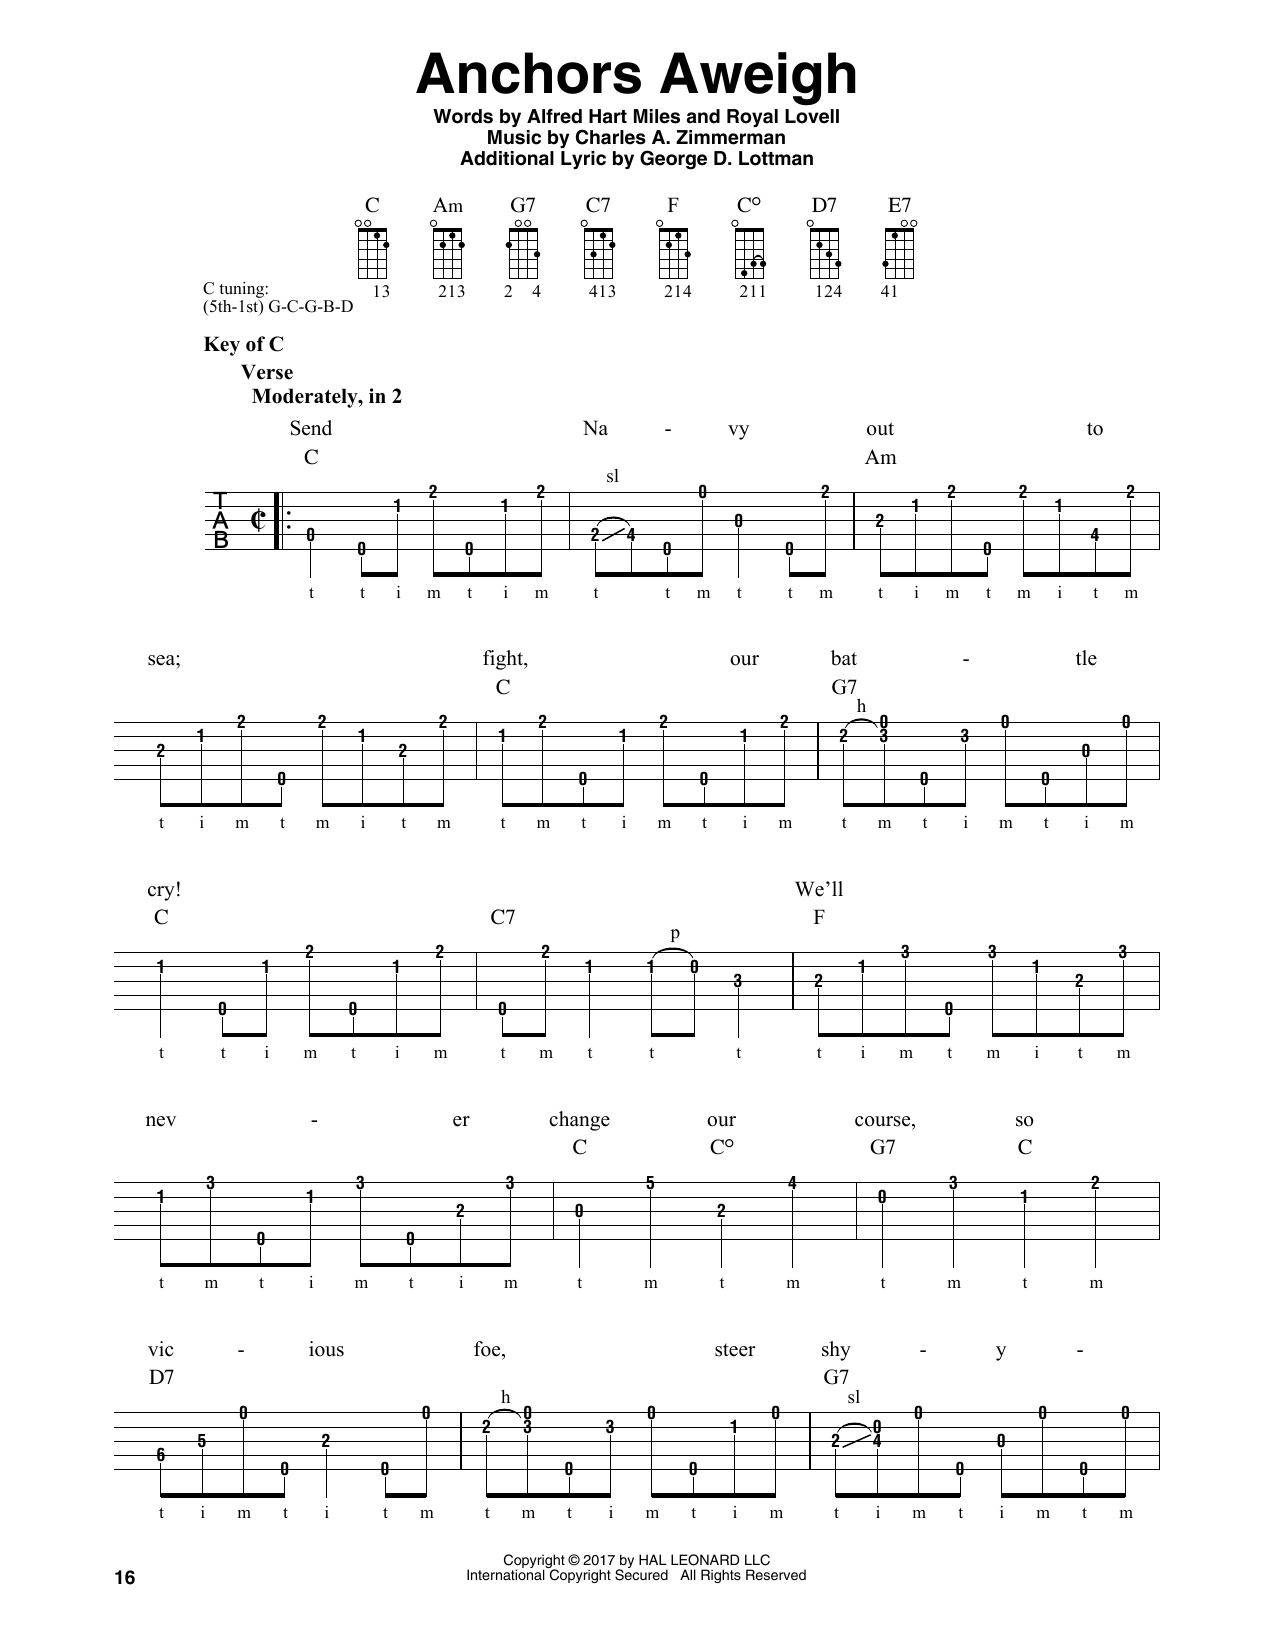 Royal Lovell Anchors Aweigh Sheet Music Notes & Chords for Banjo - Download or Print PDF